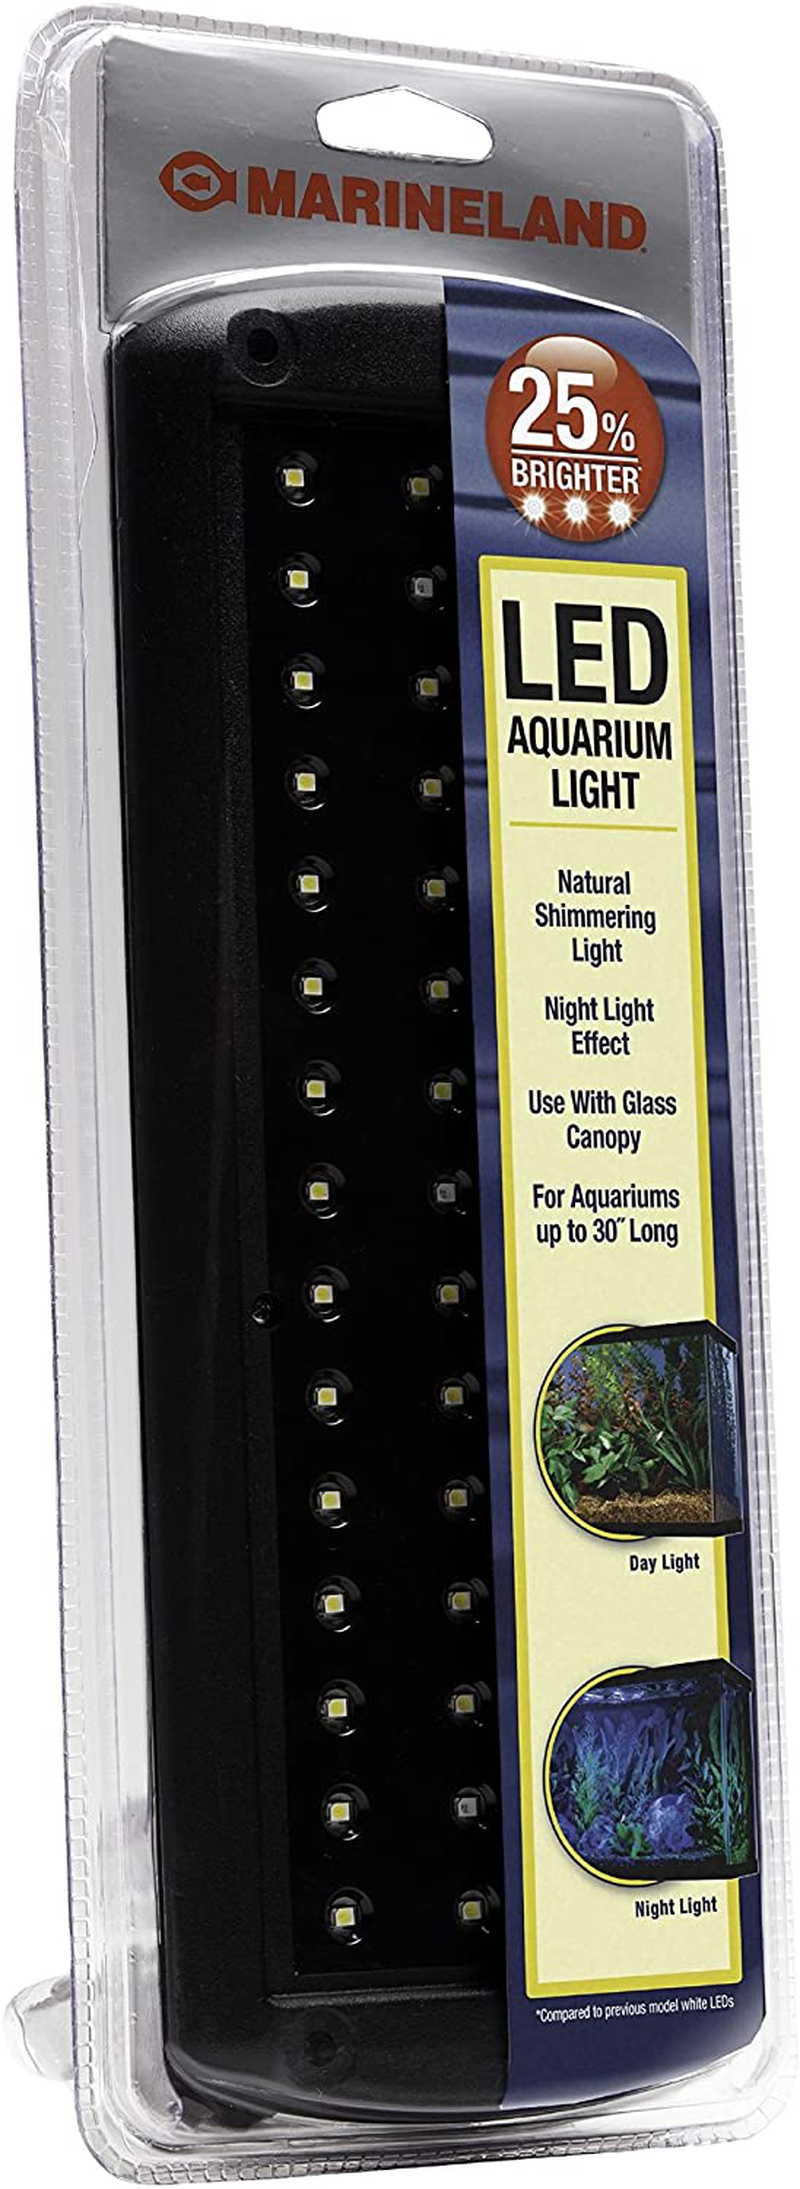 Marineland 32996 LED Aquarium Light, Natural Shimmering Light